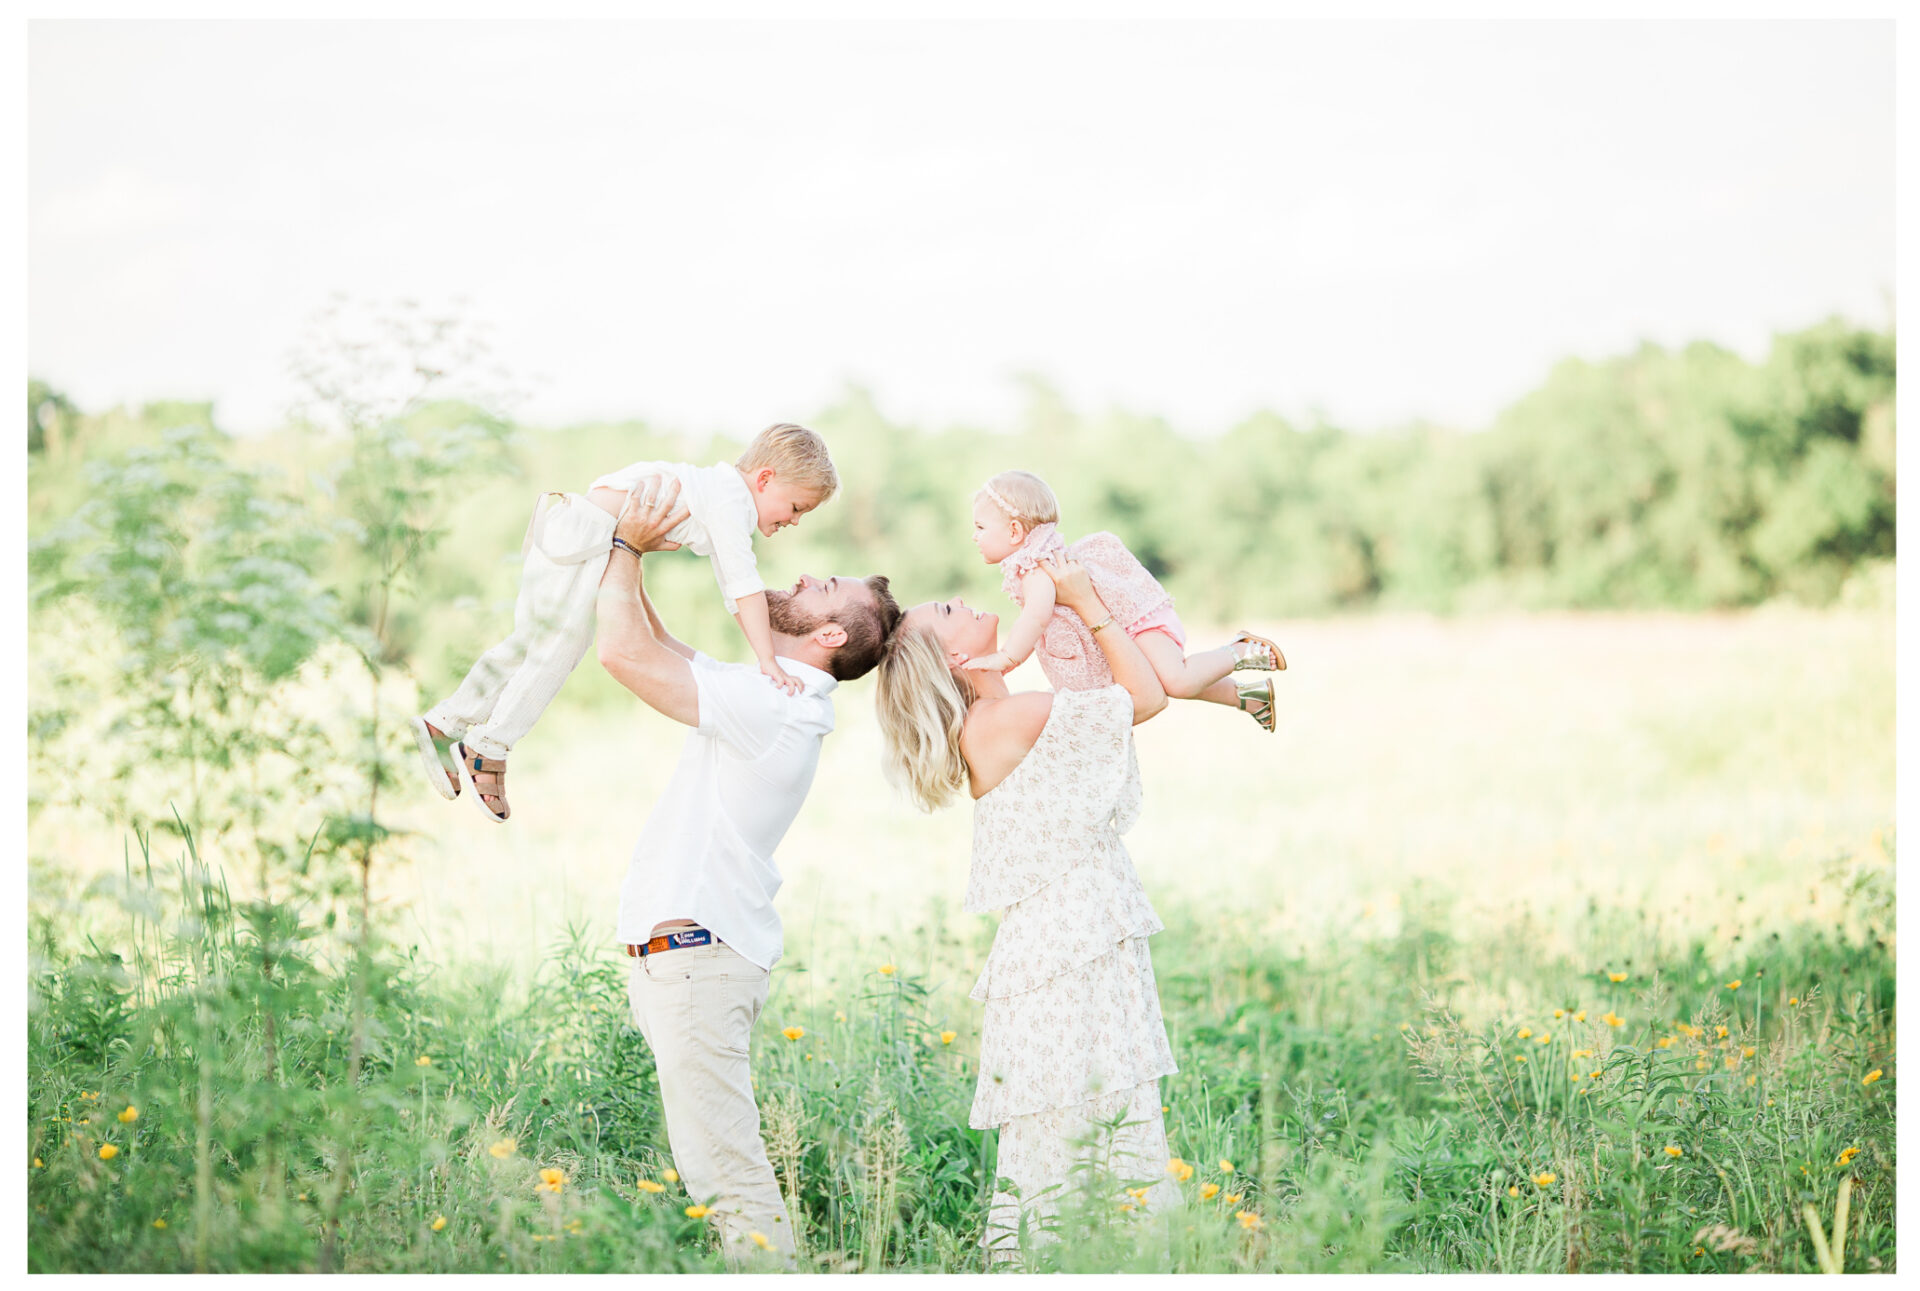 Cincinnati, Ohio Family Photographer | Wildflower Field Family Photographer | Organic Portrait Photography | Winter Freire Photography | Baby + Child Milestone Photographer Ohio